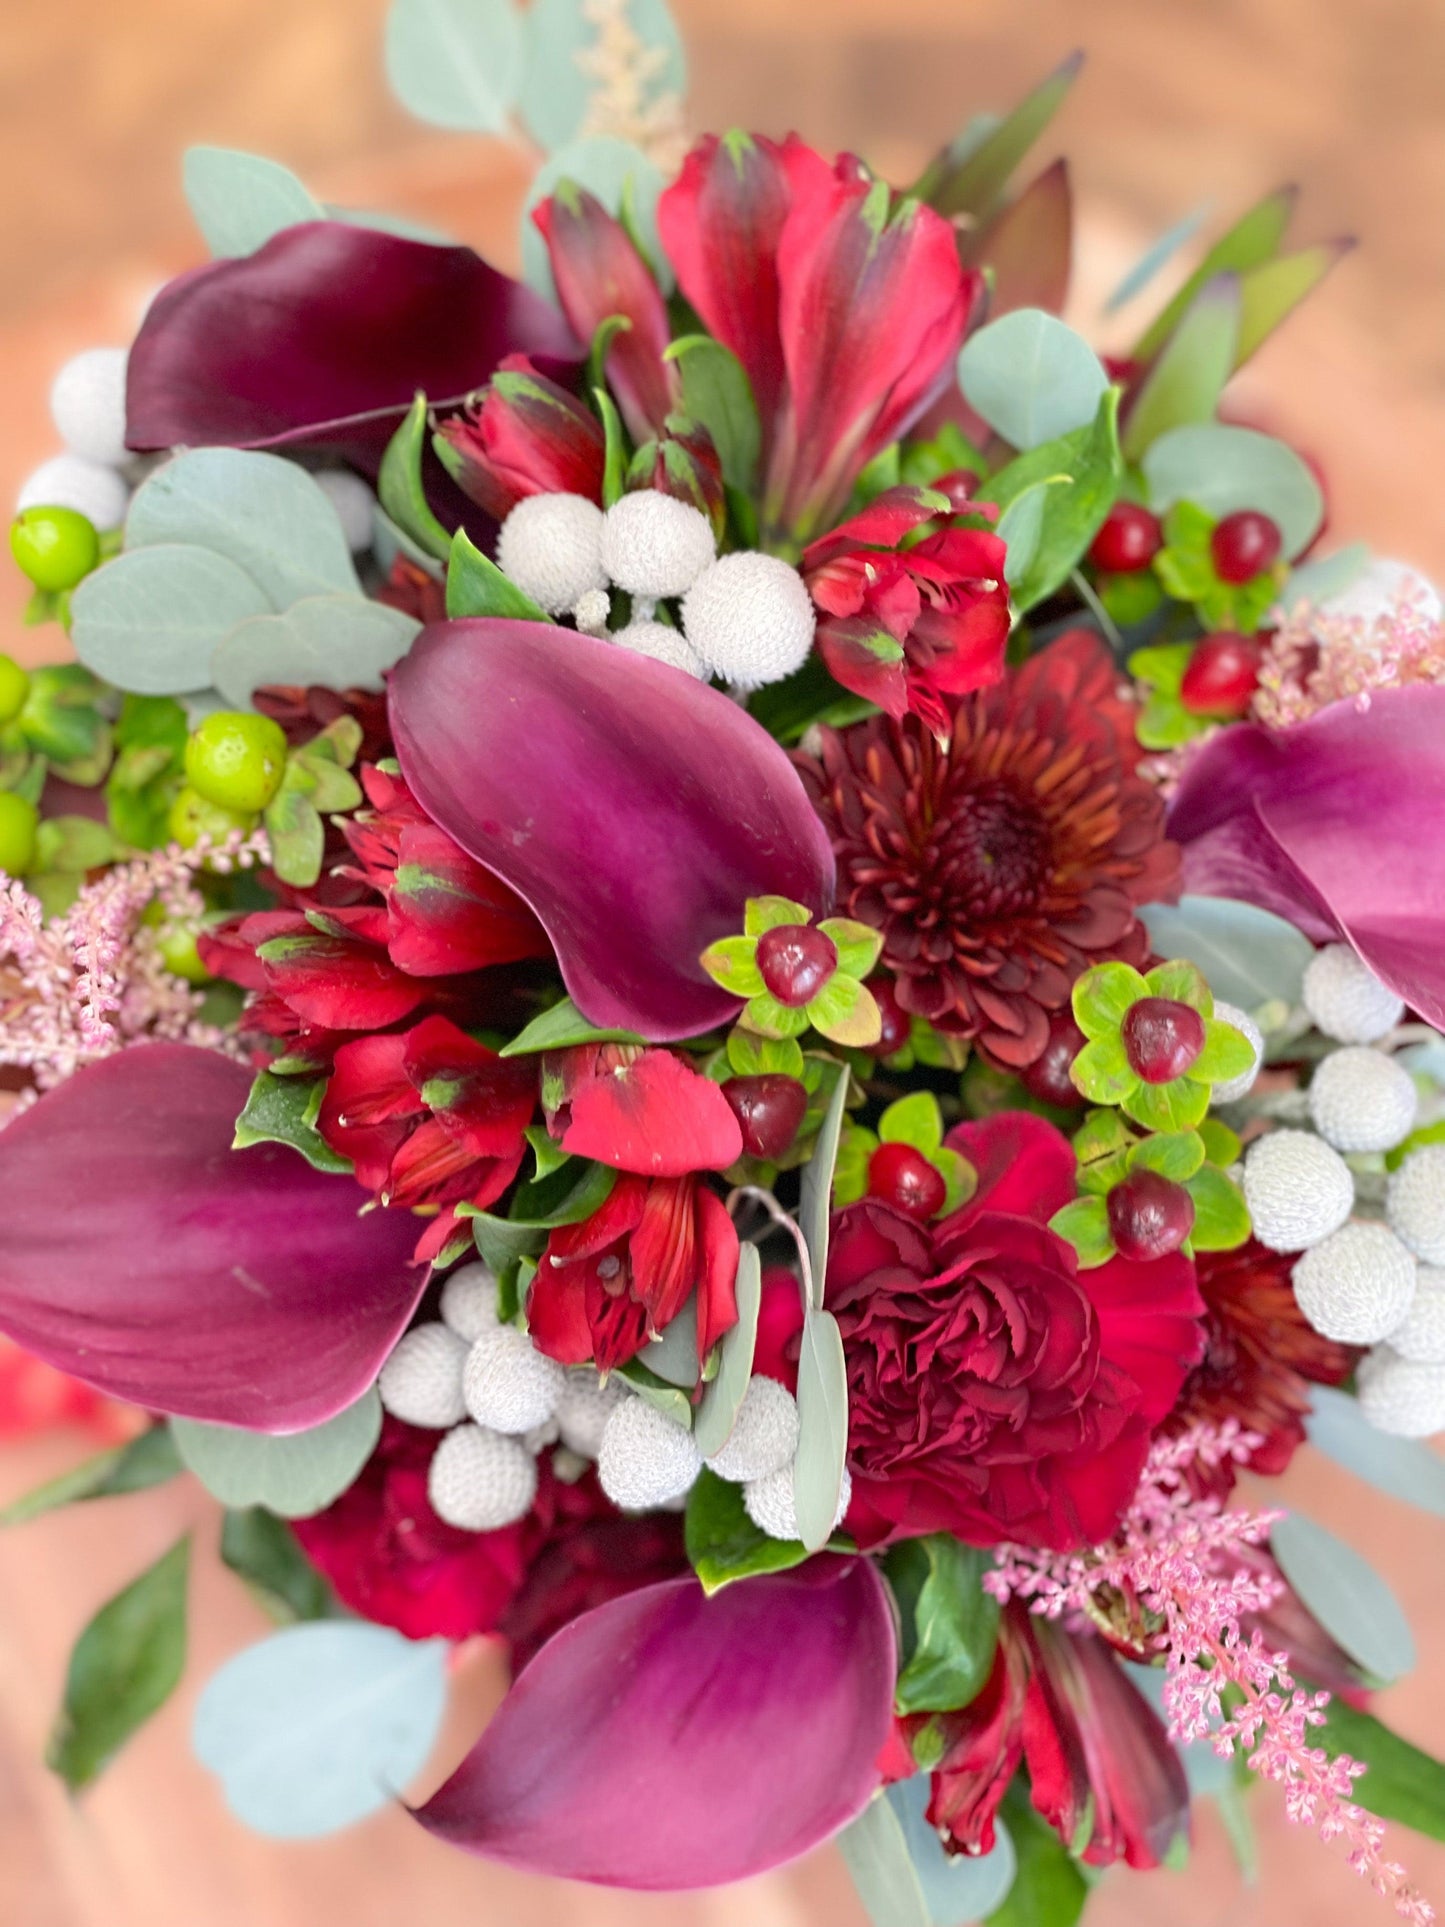 Flower Box - The Majesty Tanit Florist